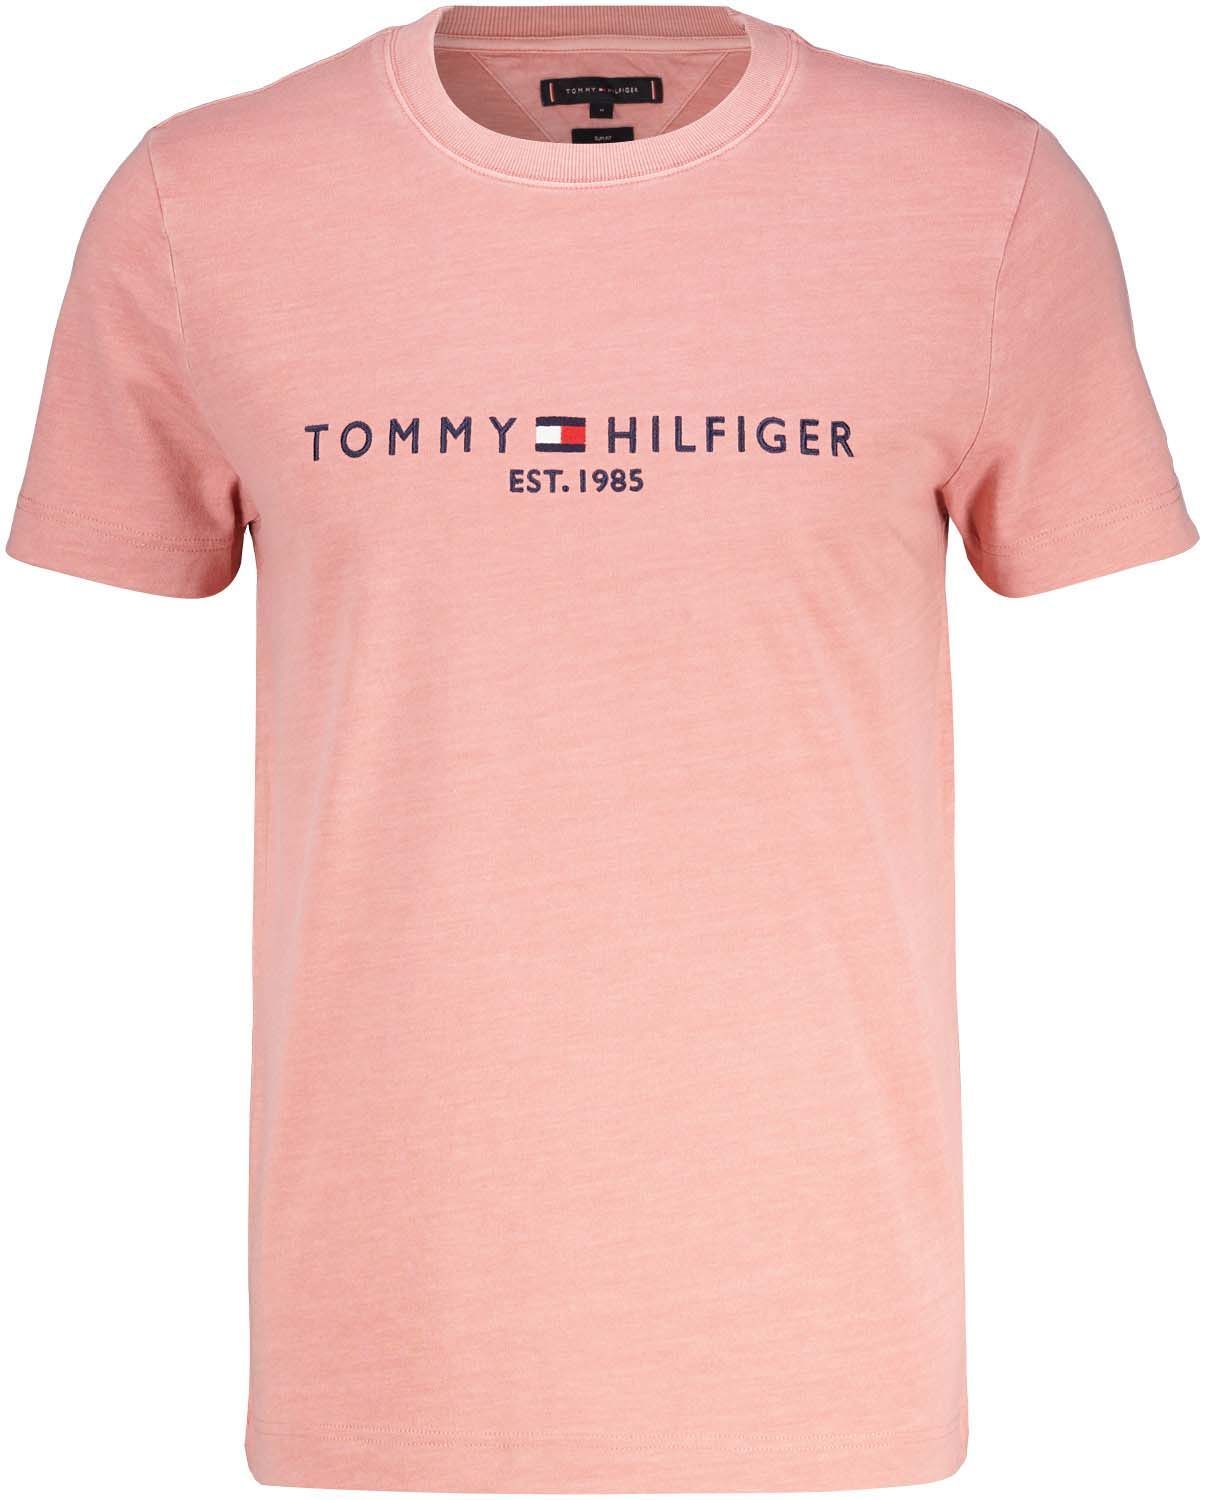 Tommy Hilfiger T-Shirt Koraal Roze